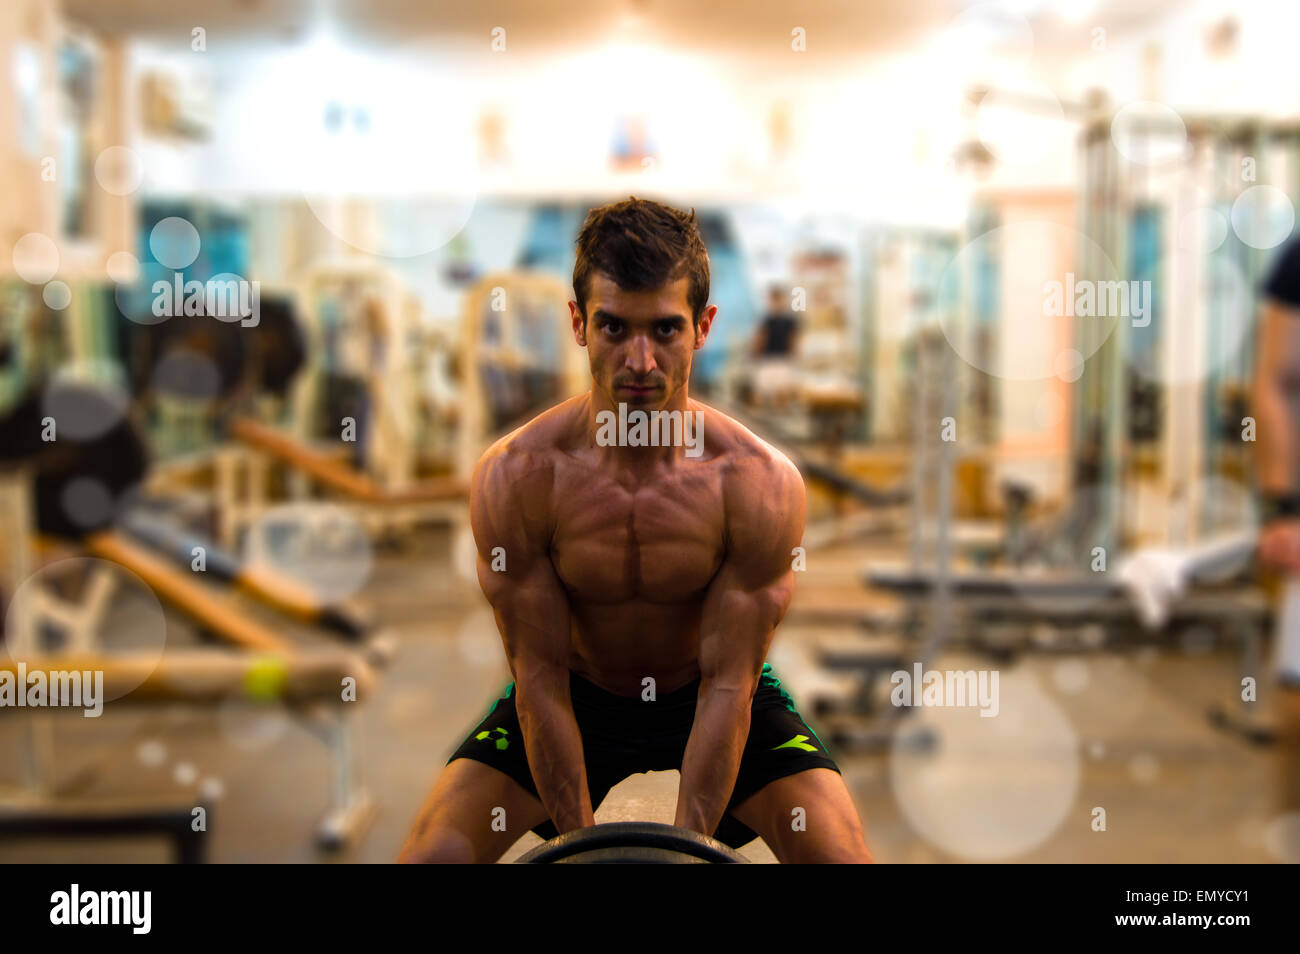 Bodybuilder Lifting Weightlifting Bar At Rusty Gym Stock Photo